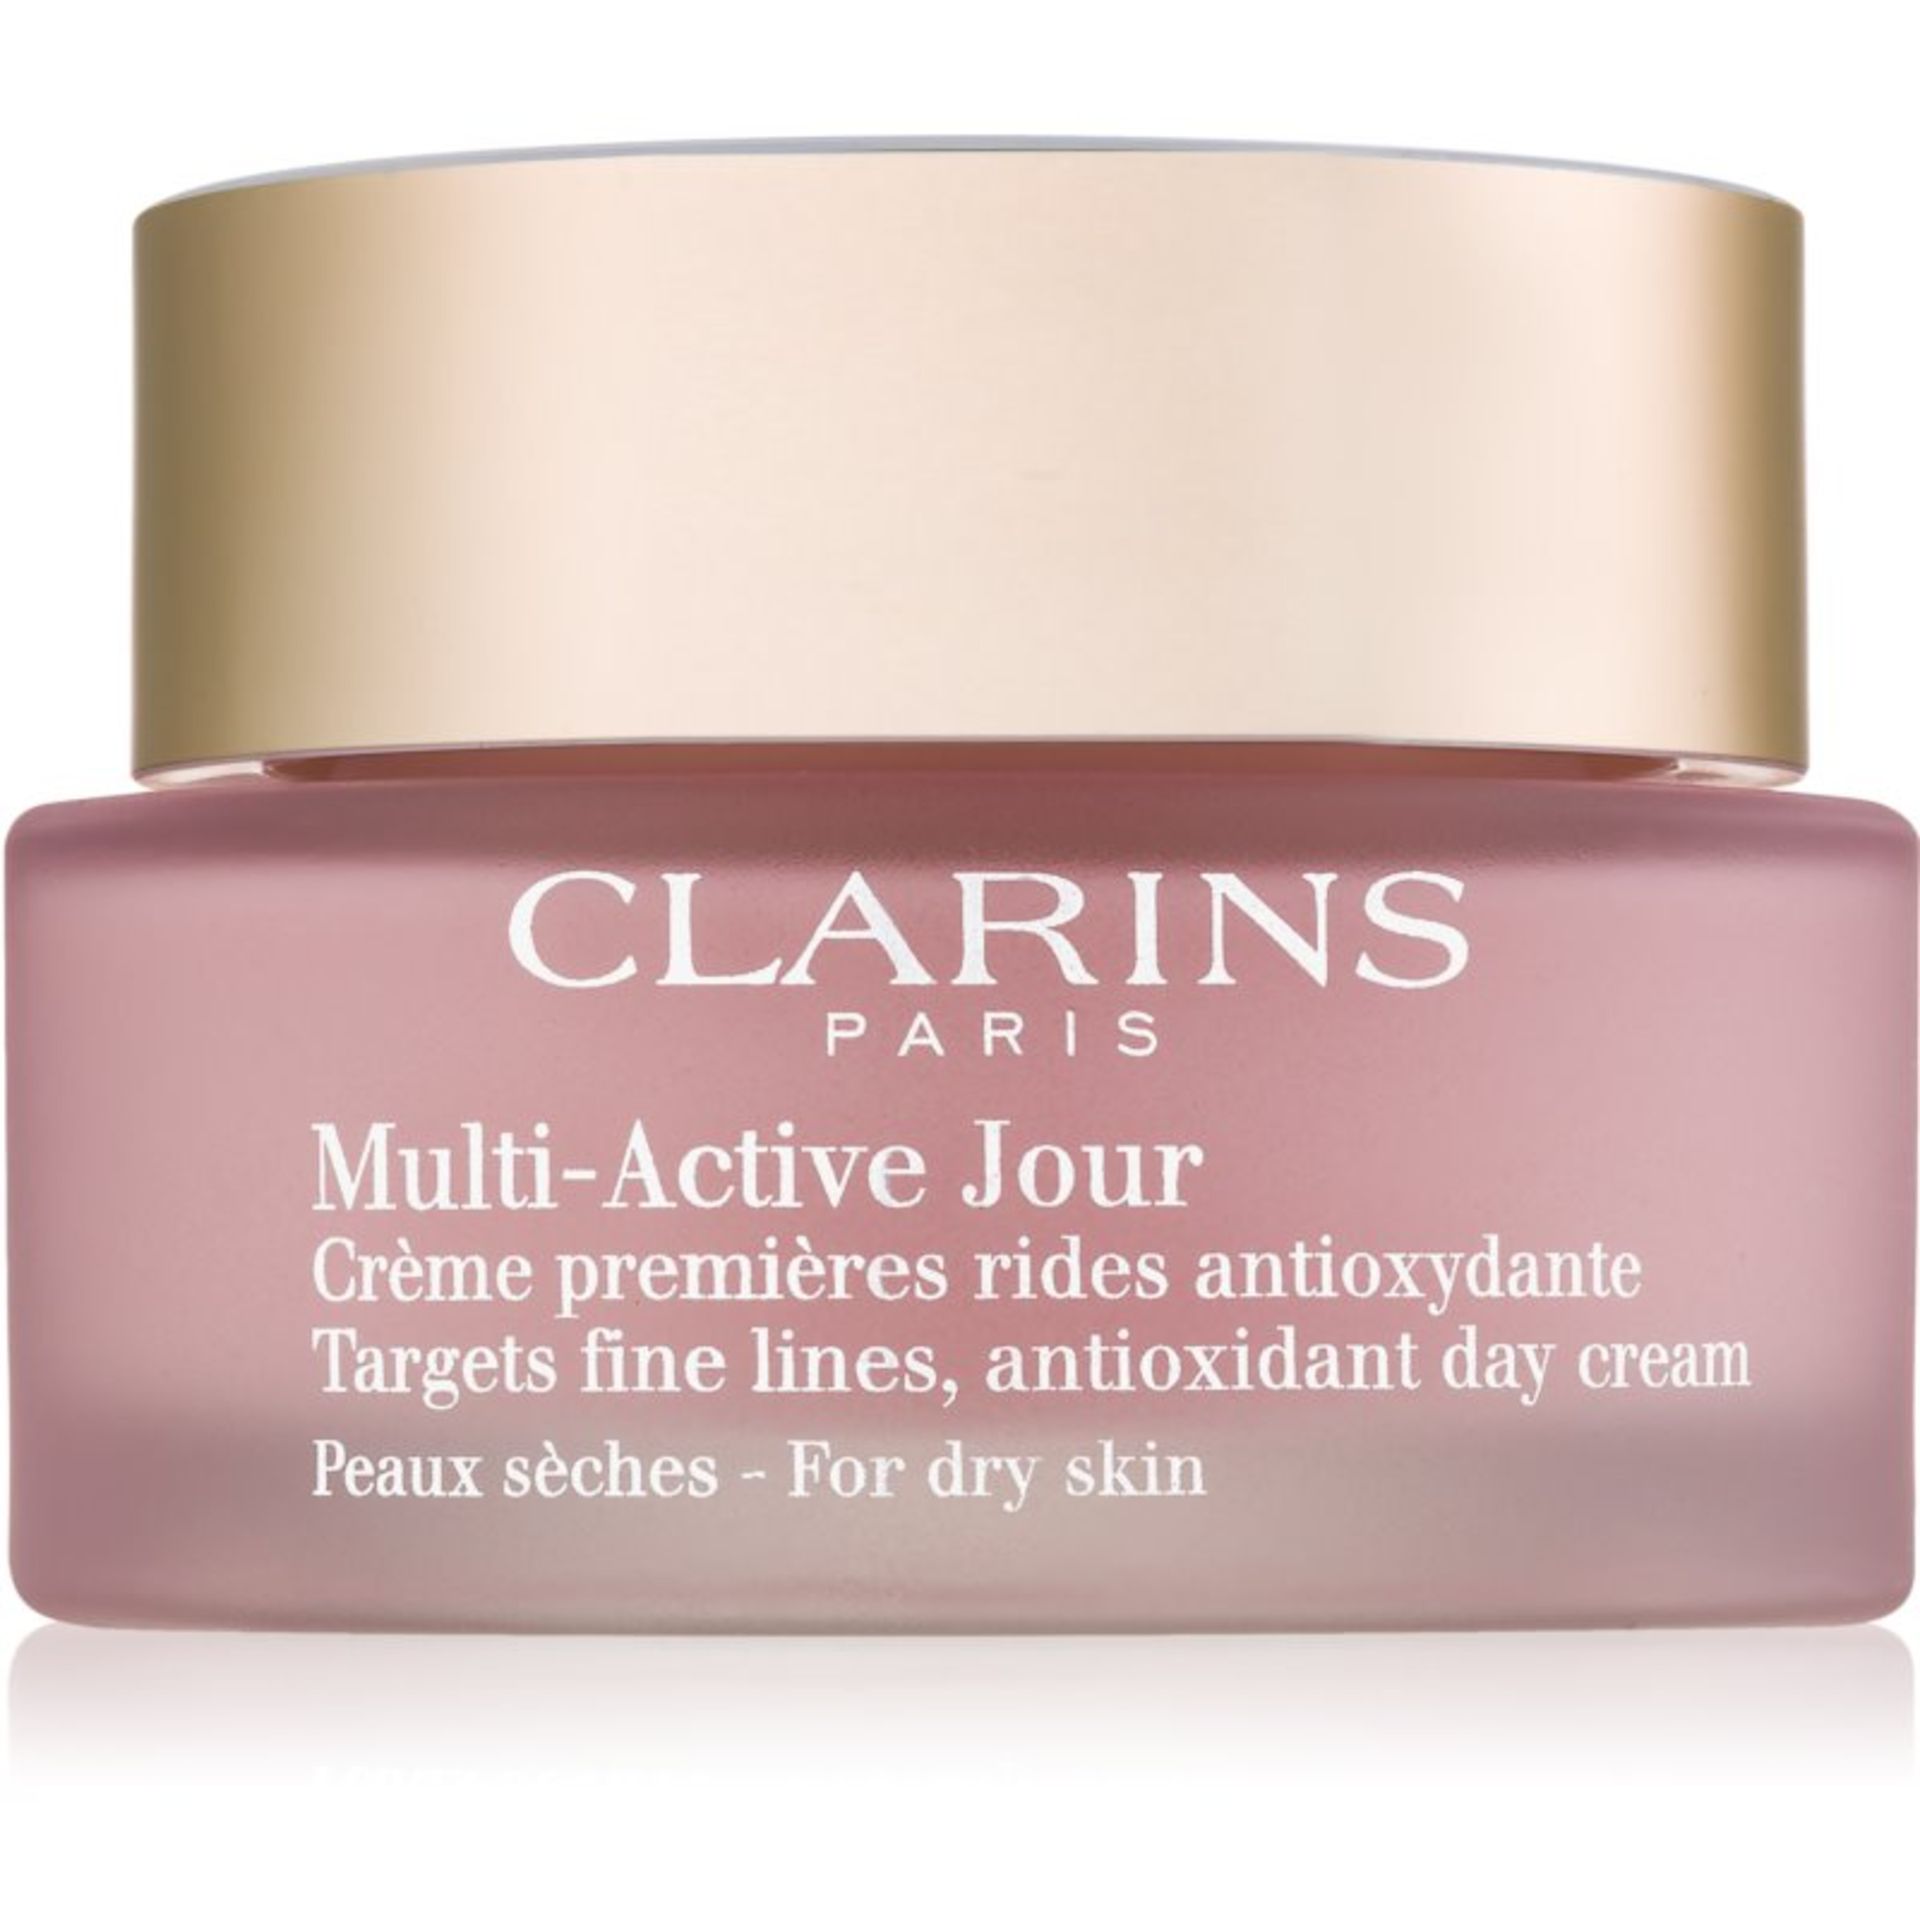 + VAT Brand New Clarins Multi-Active Jour Dry Skin types 50ml